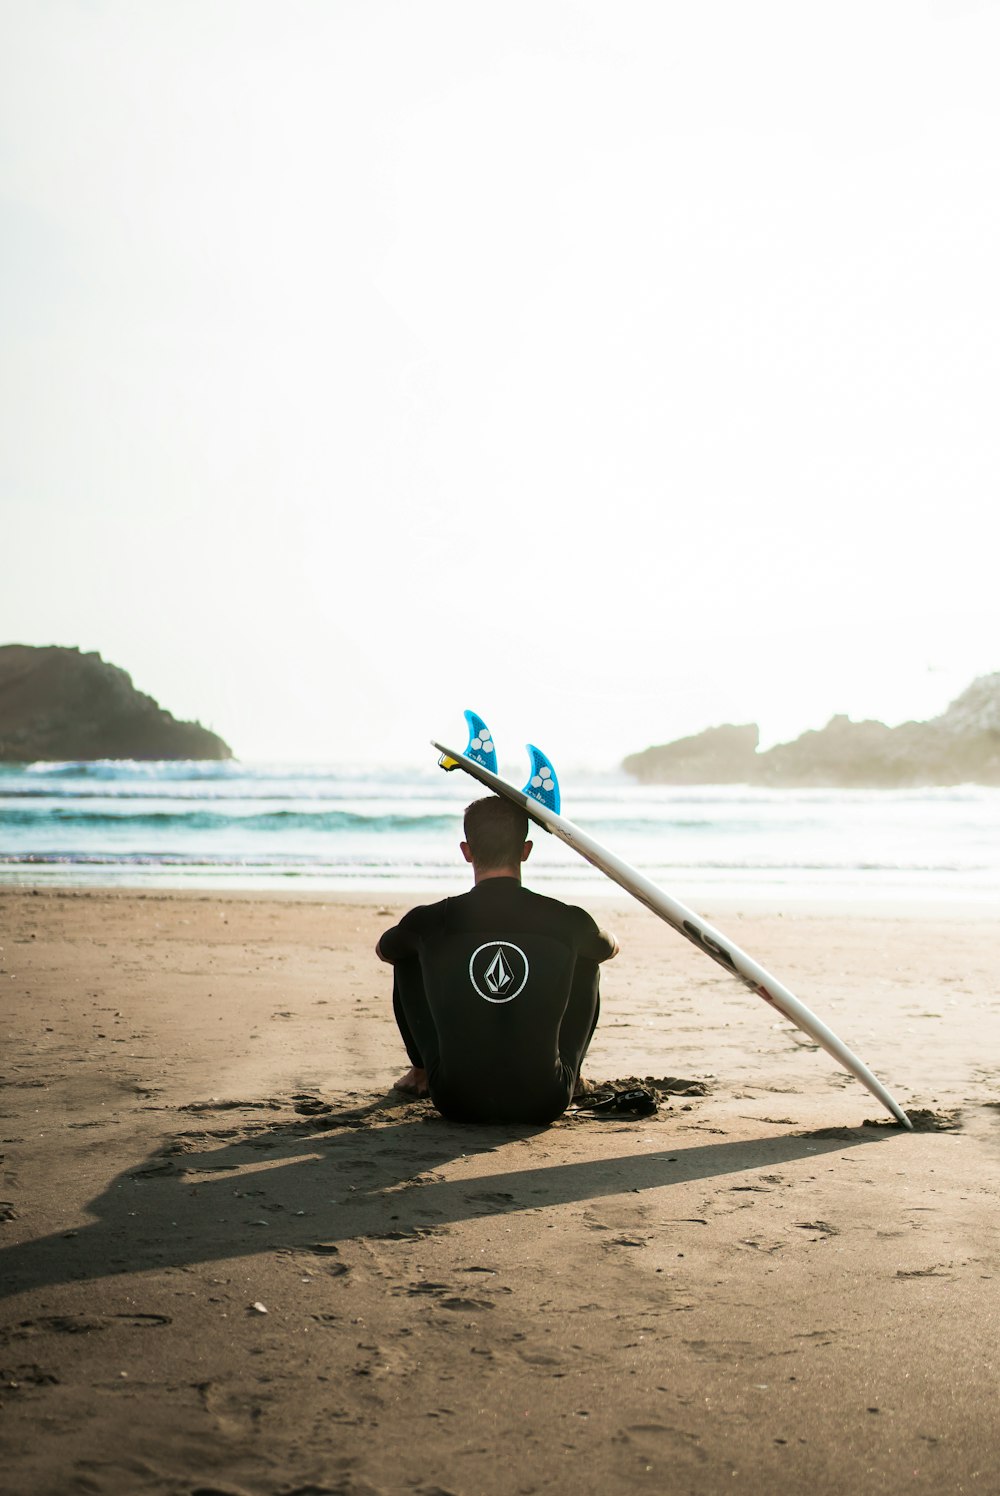 1500+ Surf Pictures  Download Free Images on Unsplash